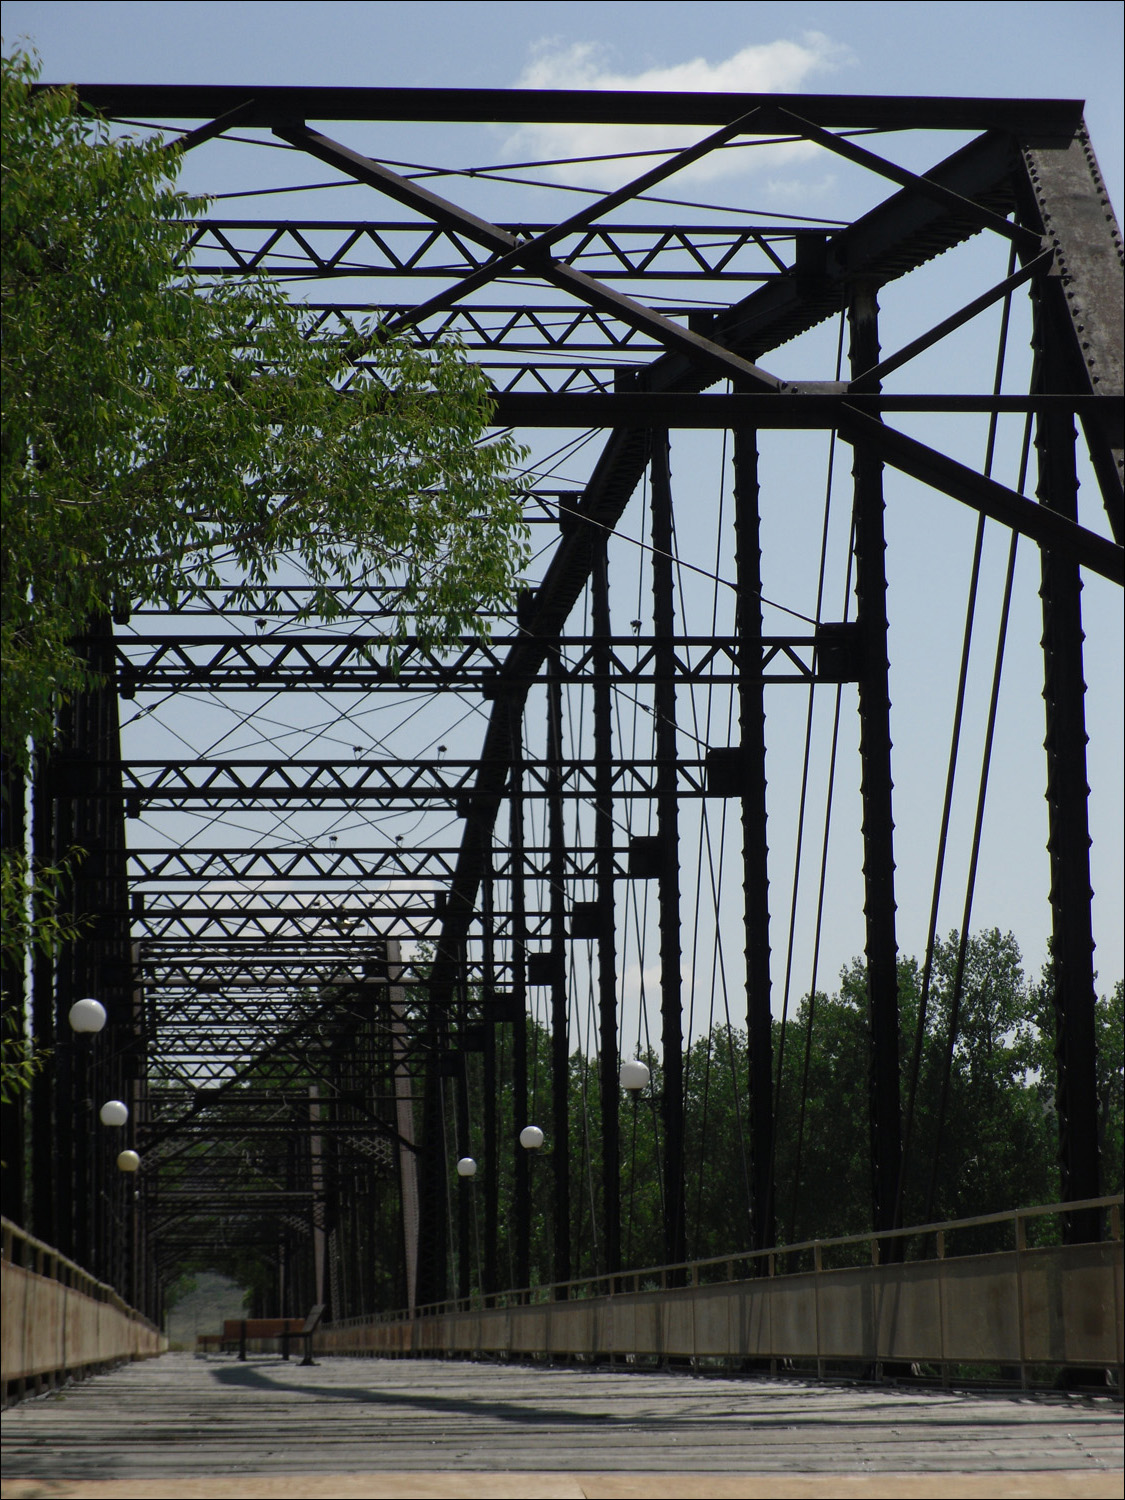 Fort Benton, MT- Old bridge crossing the Missouri River